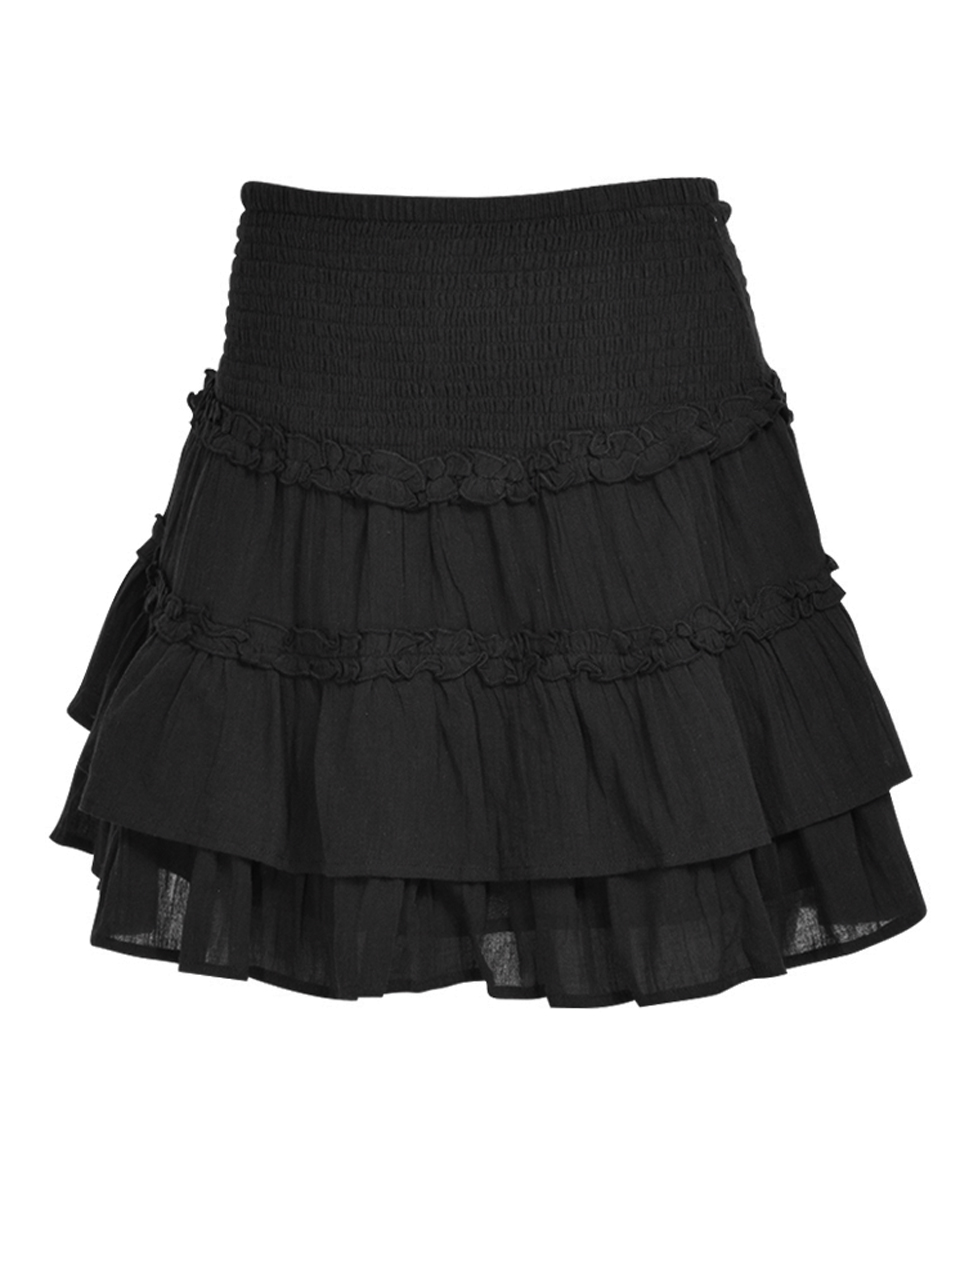 ALLISON Naomi Mini Skirt in Black Product Shot 